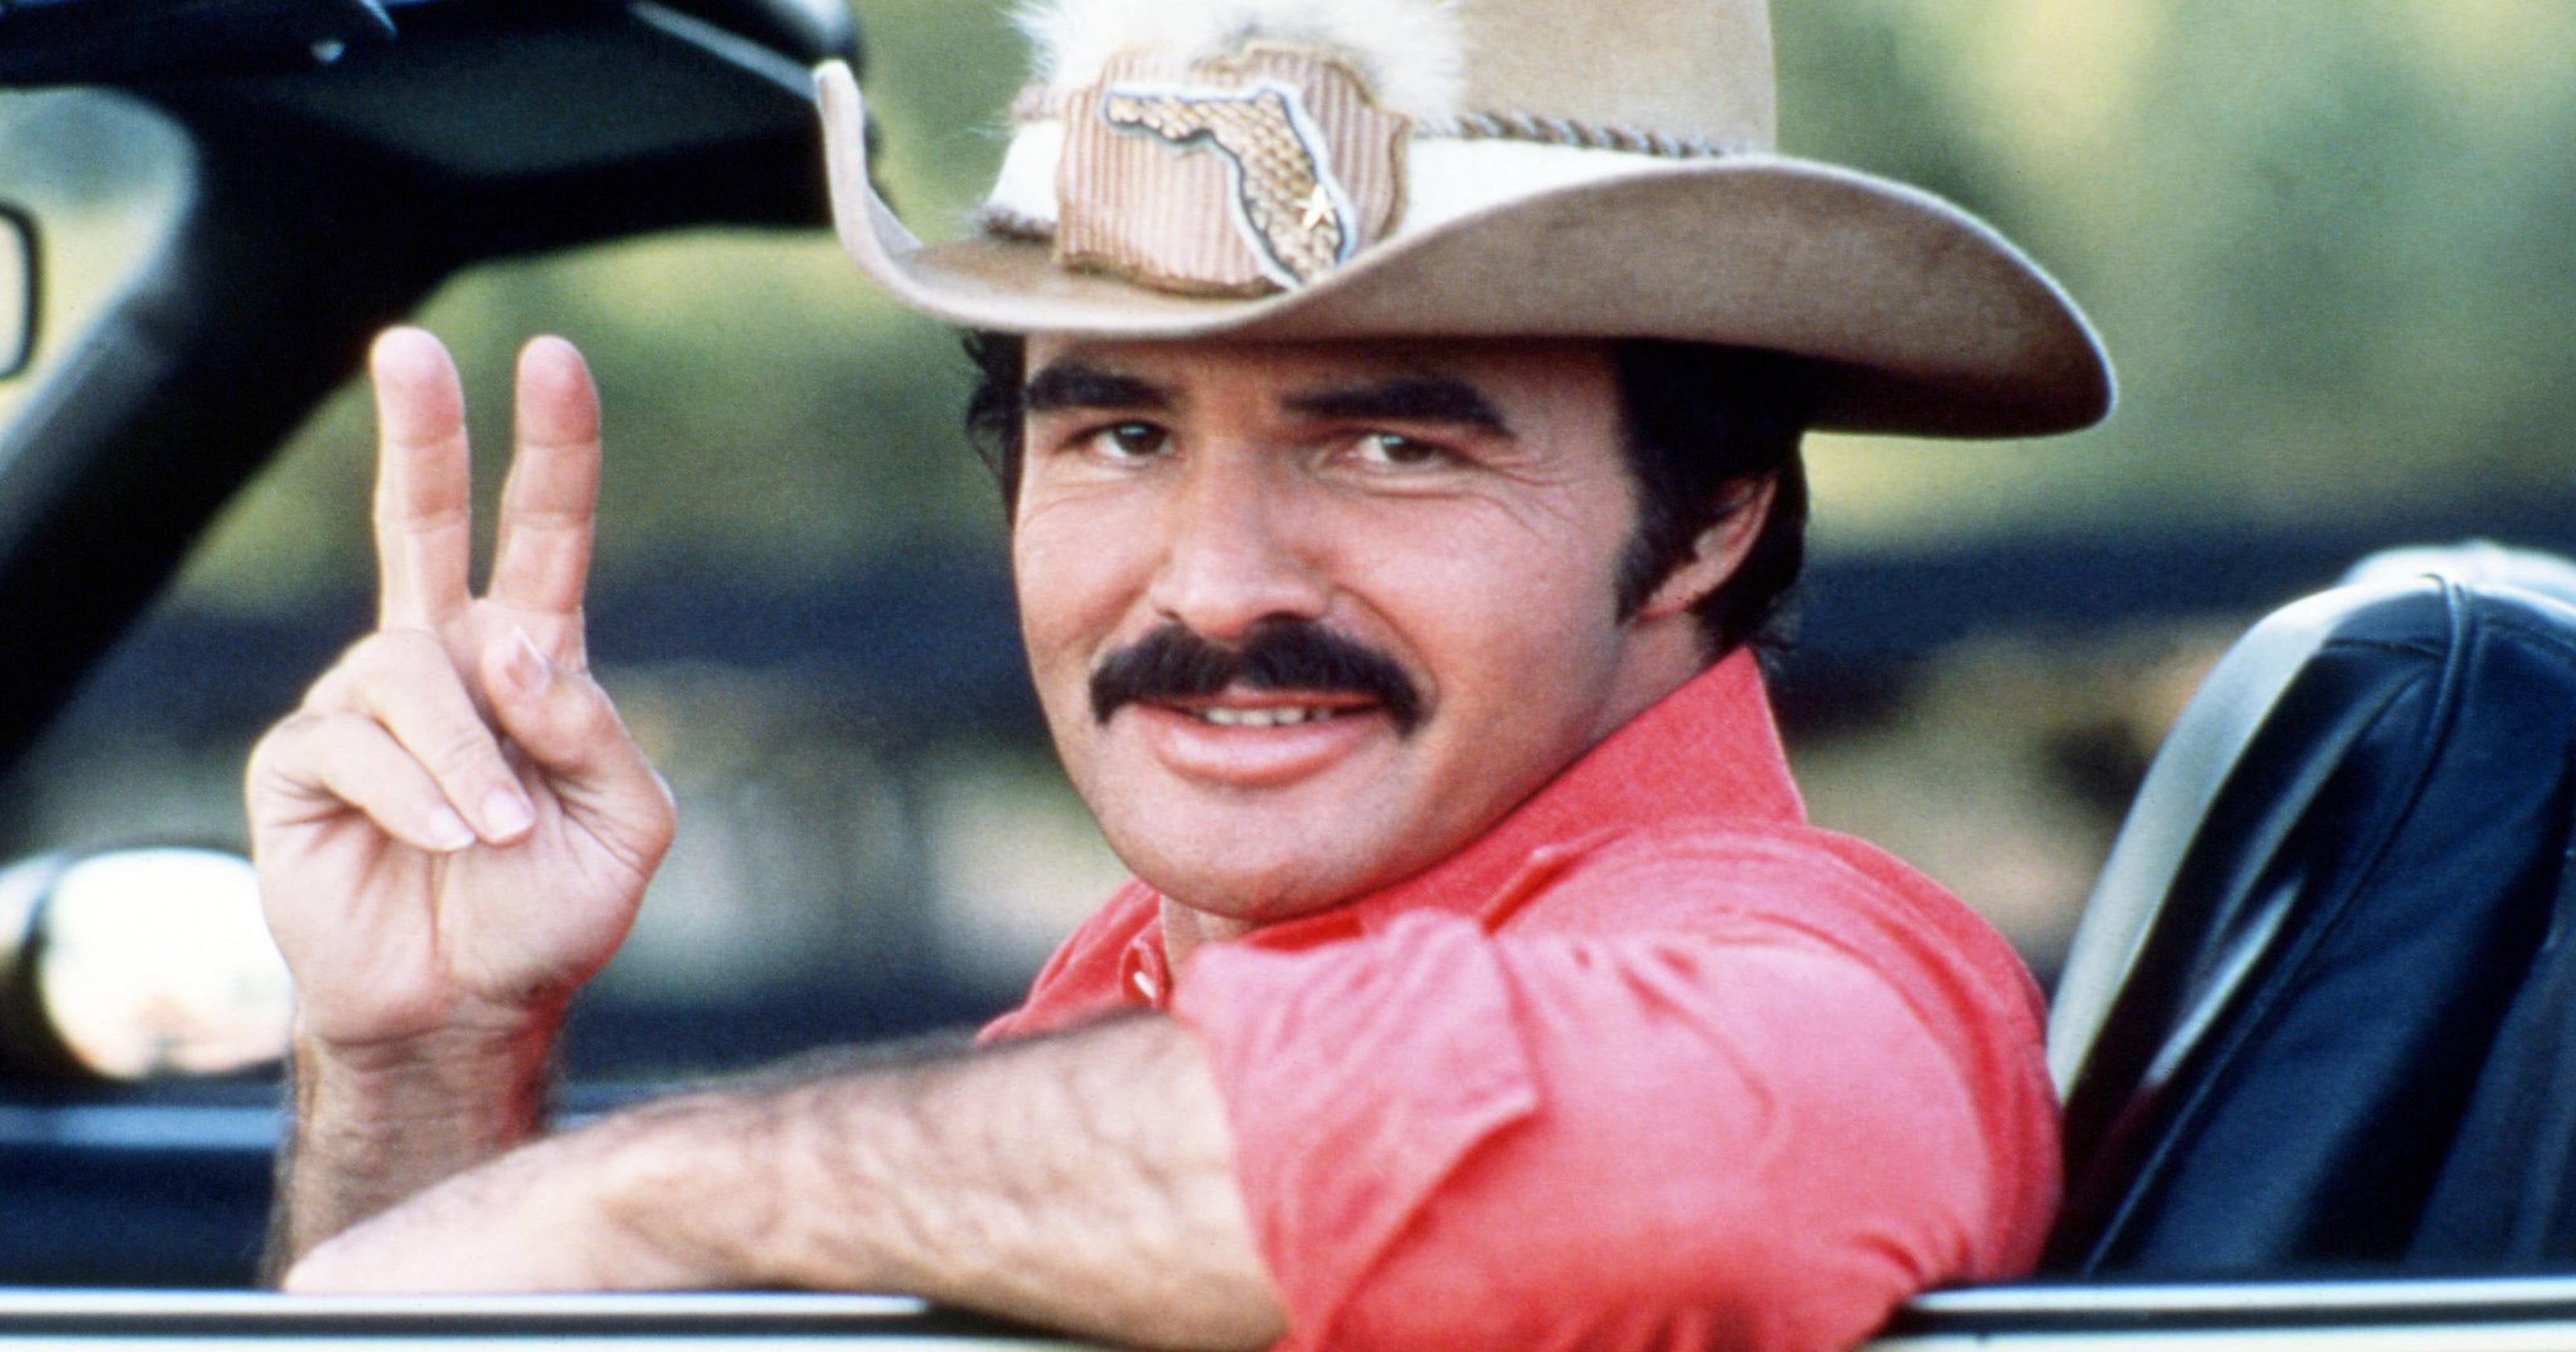 1979 Fsu Porn - Burt Reynolds never left Florida: His many ties to the ...